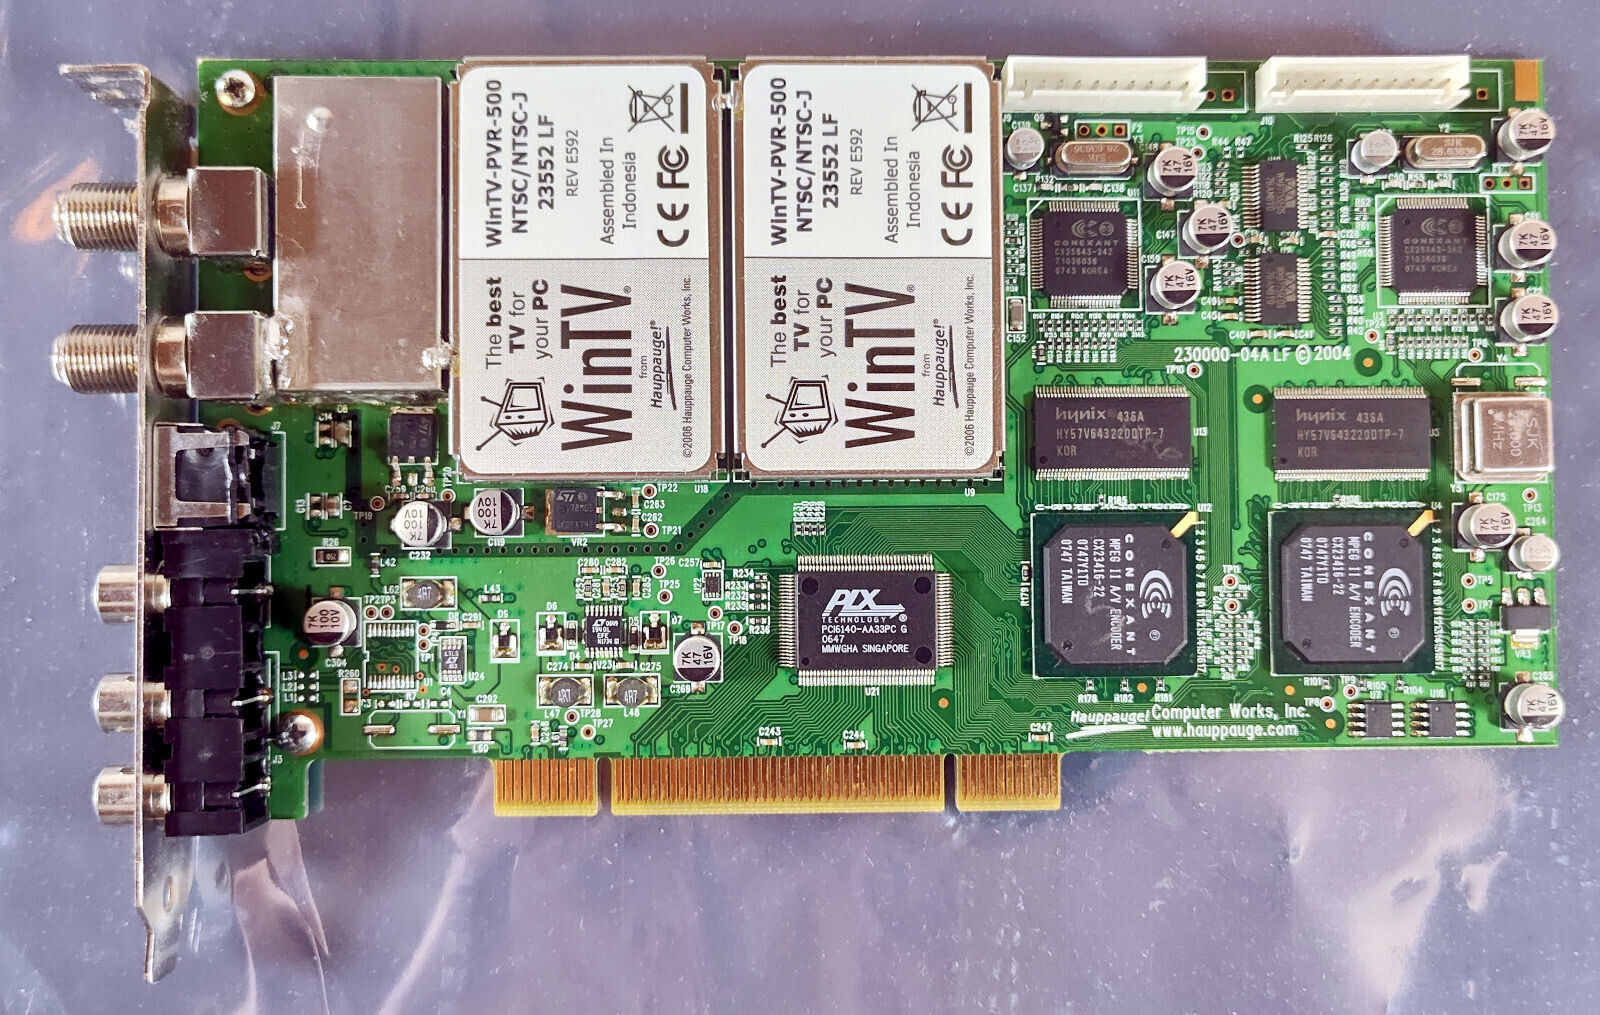 Hauppauge WinTV PVR-500 NTSC-J Windows PCI TV Dual Tuner Card ser#5007